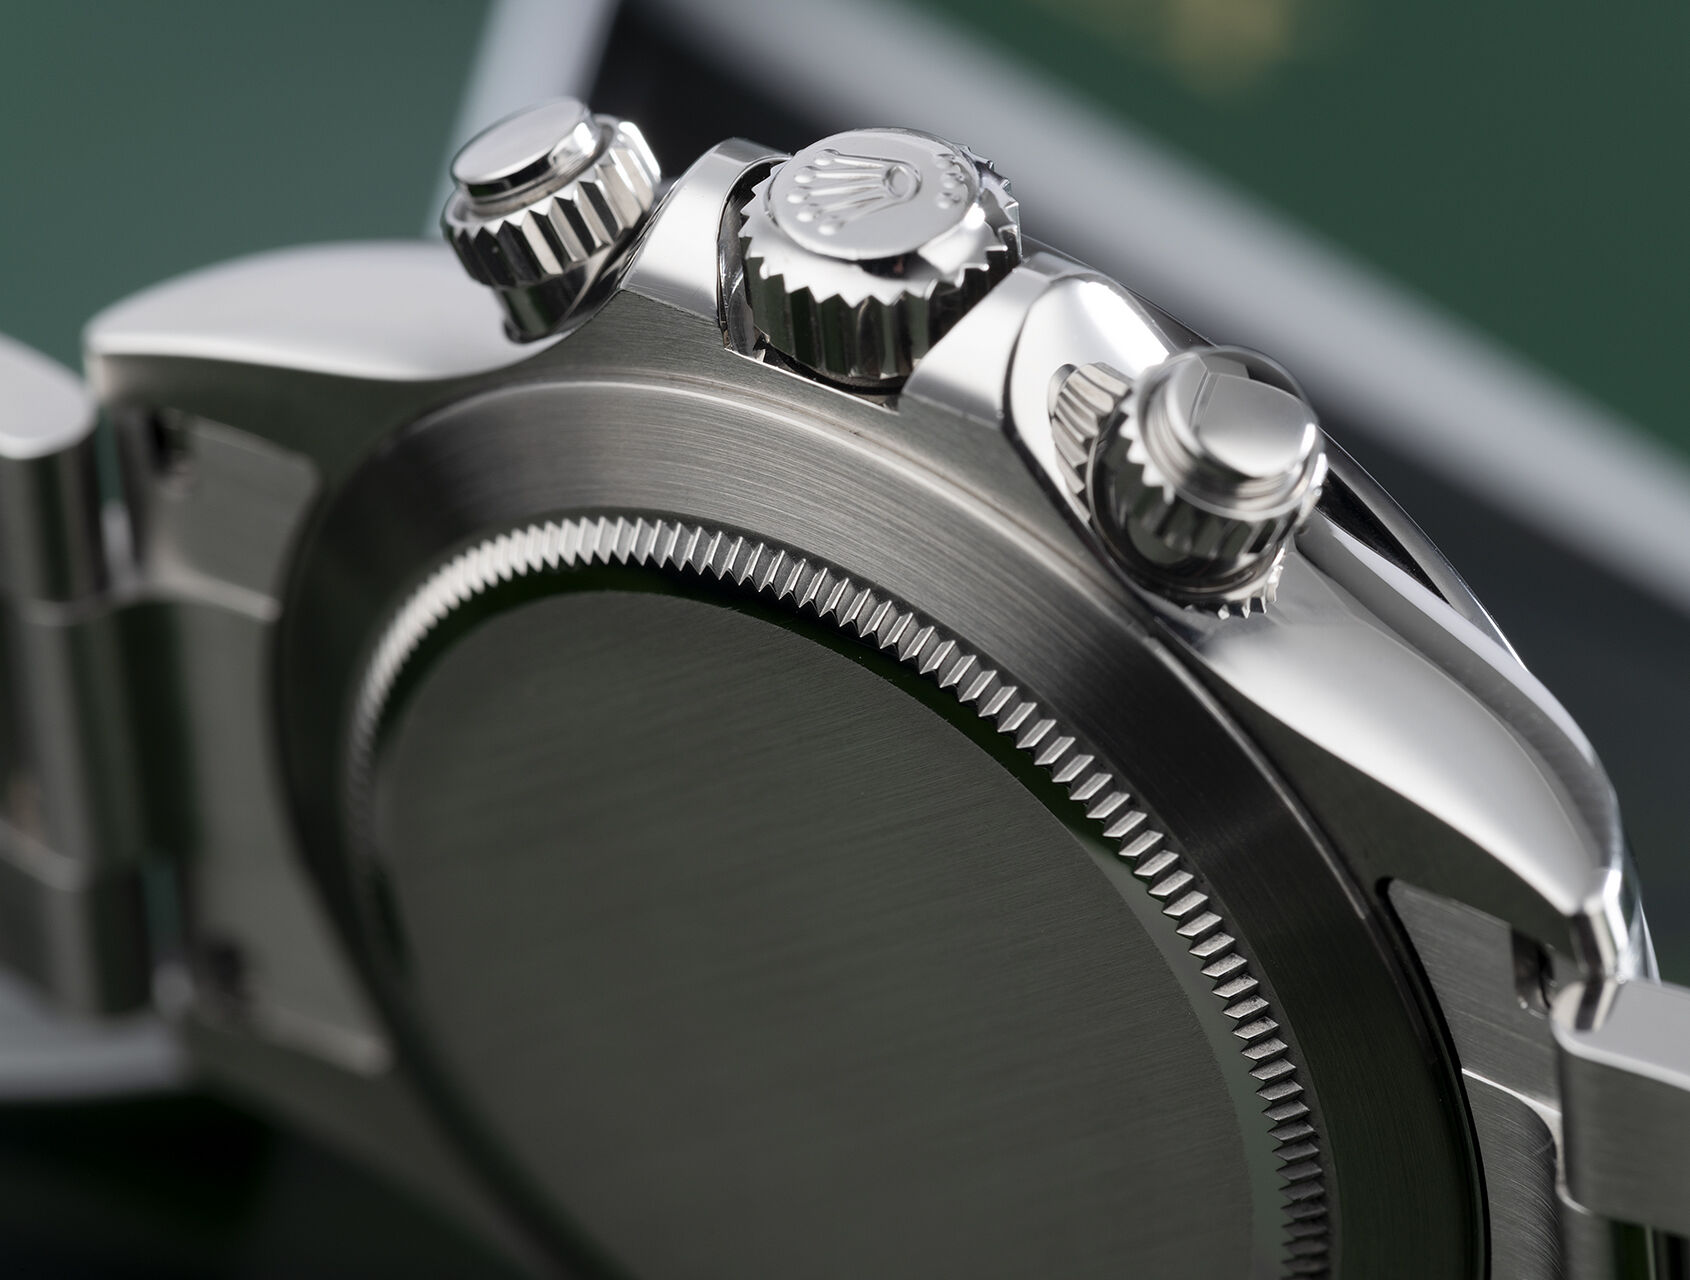 ref 116500LN | 116500LN - Rolex Warranty to 2025 | Rolex Cosmograph Daytona